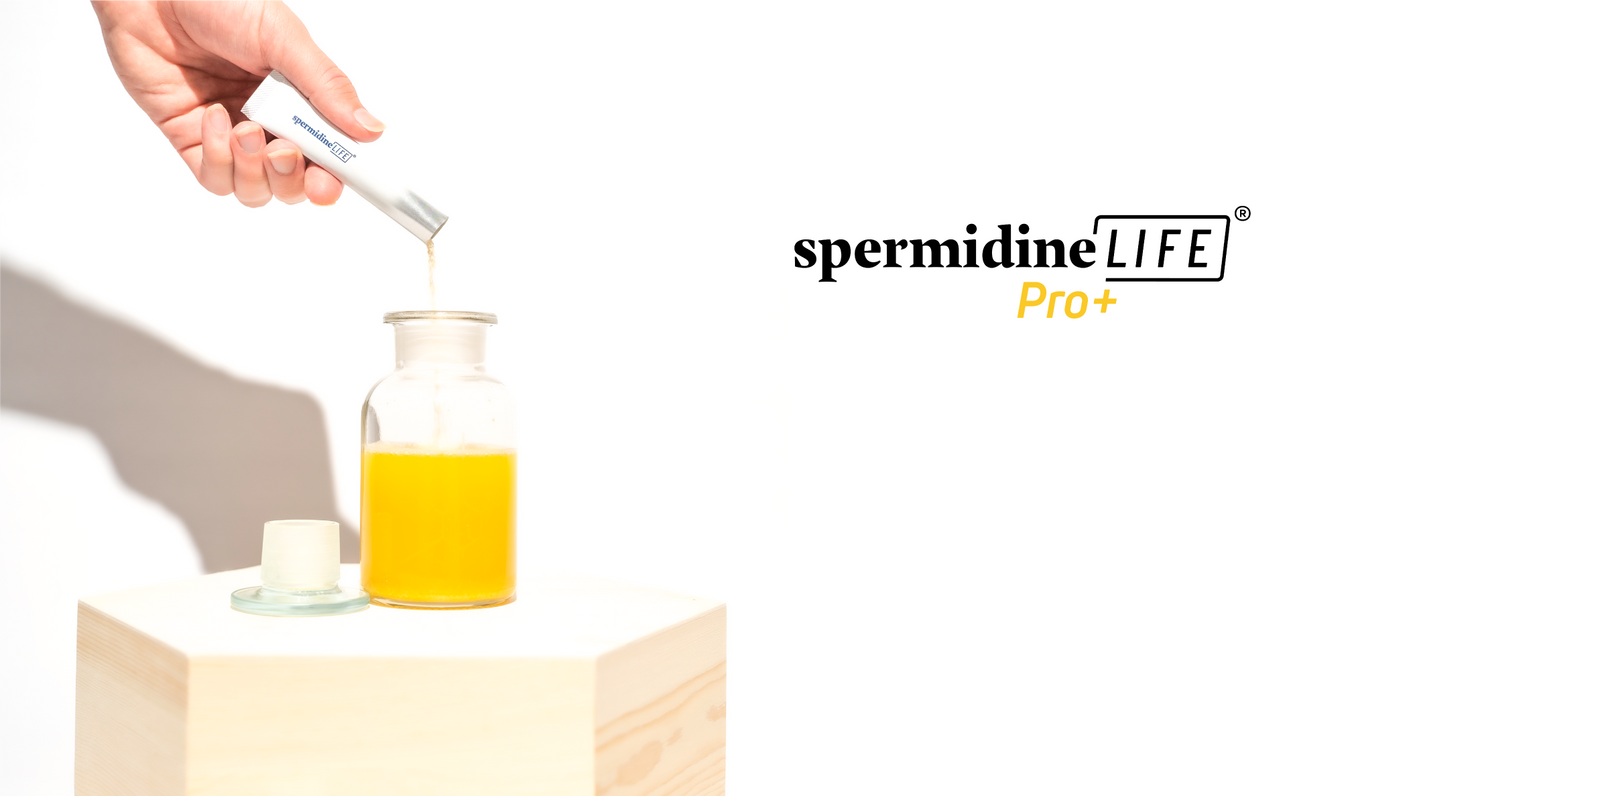 spermidineLIFE Pro - World's first professional grade spermidine supplement